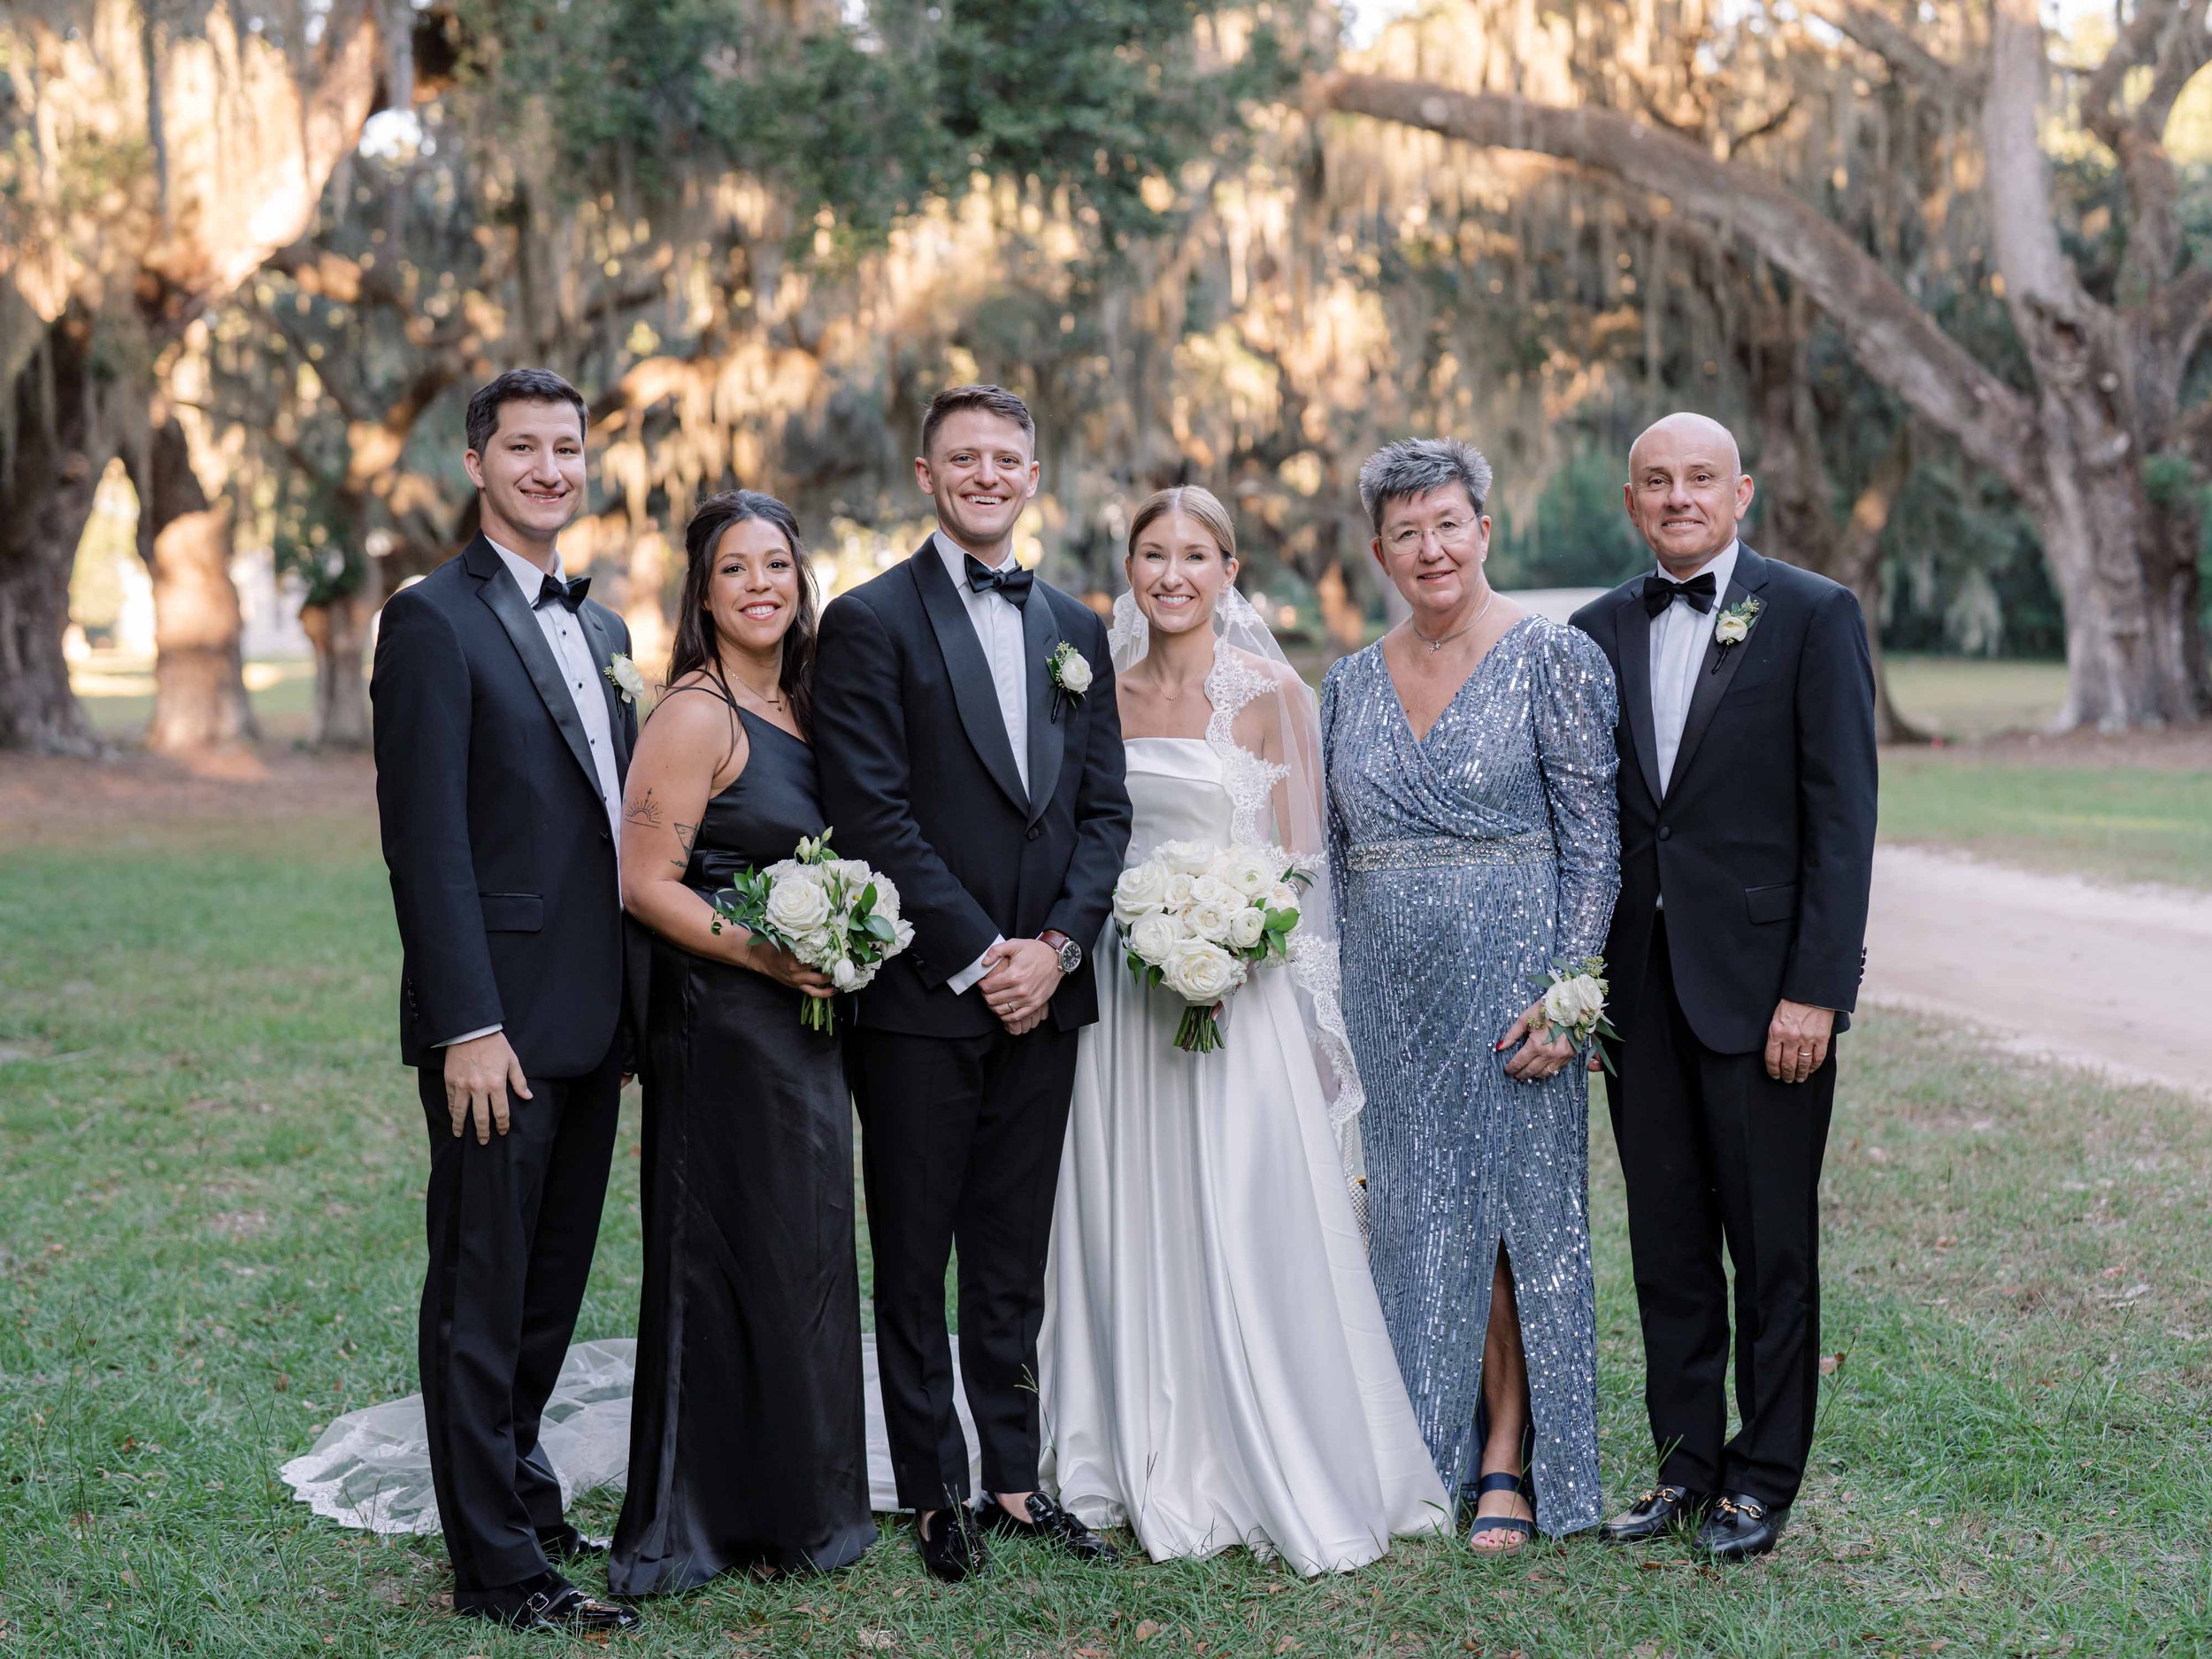 Elias-Felton-Spring-Island-South-Carolina-Wedding-Photographer-Holly-Felts-Photography-1054.jpg